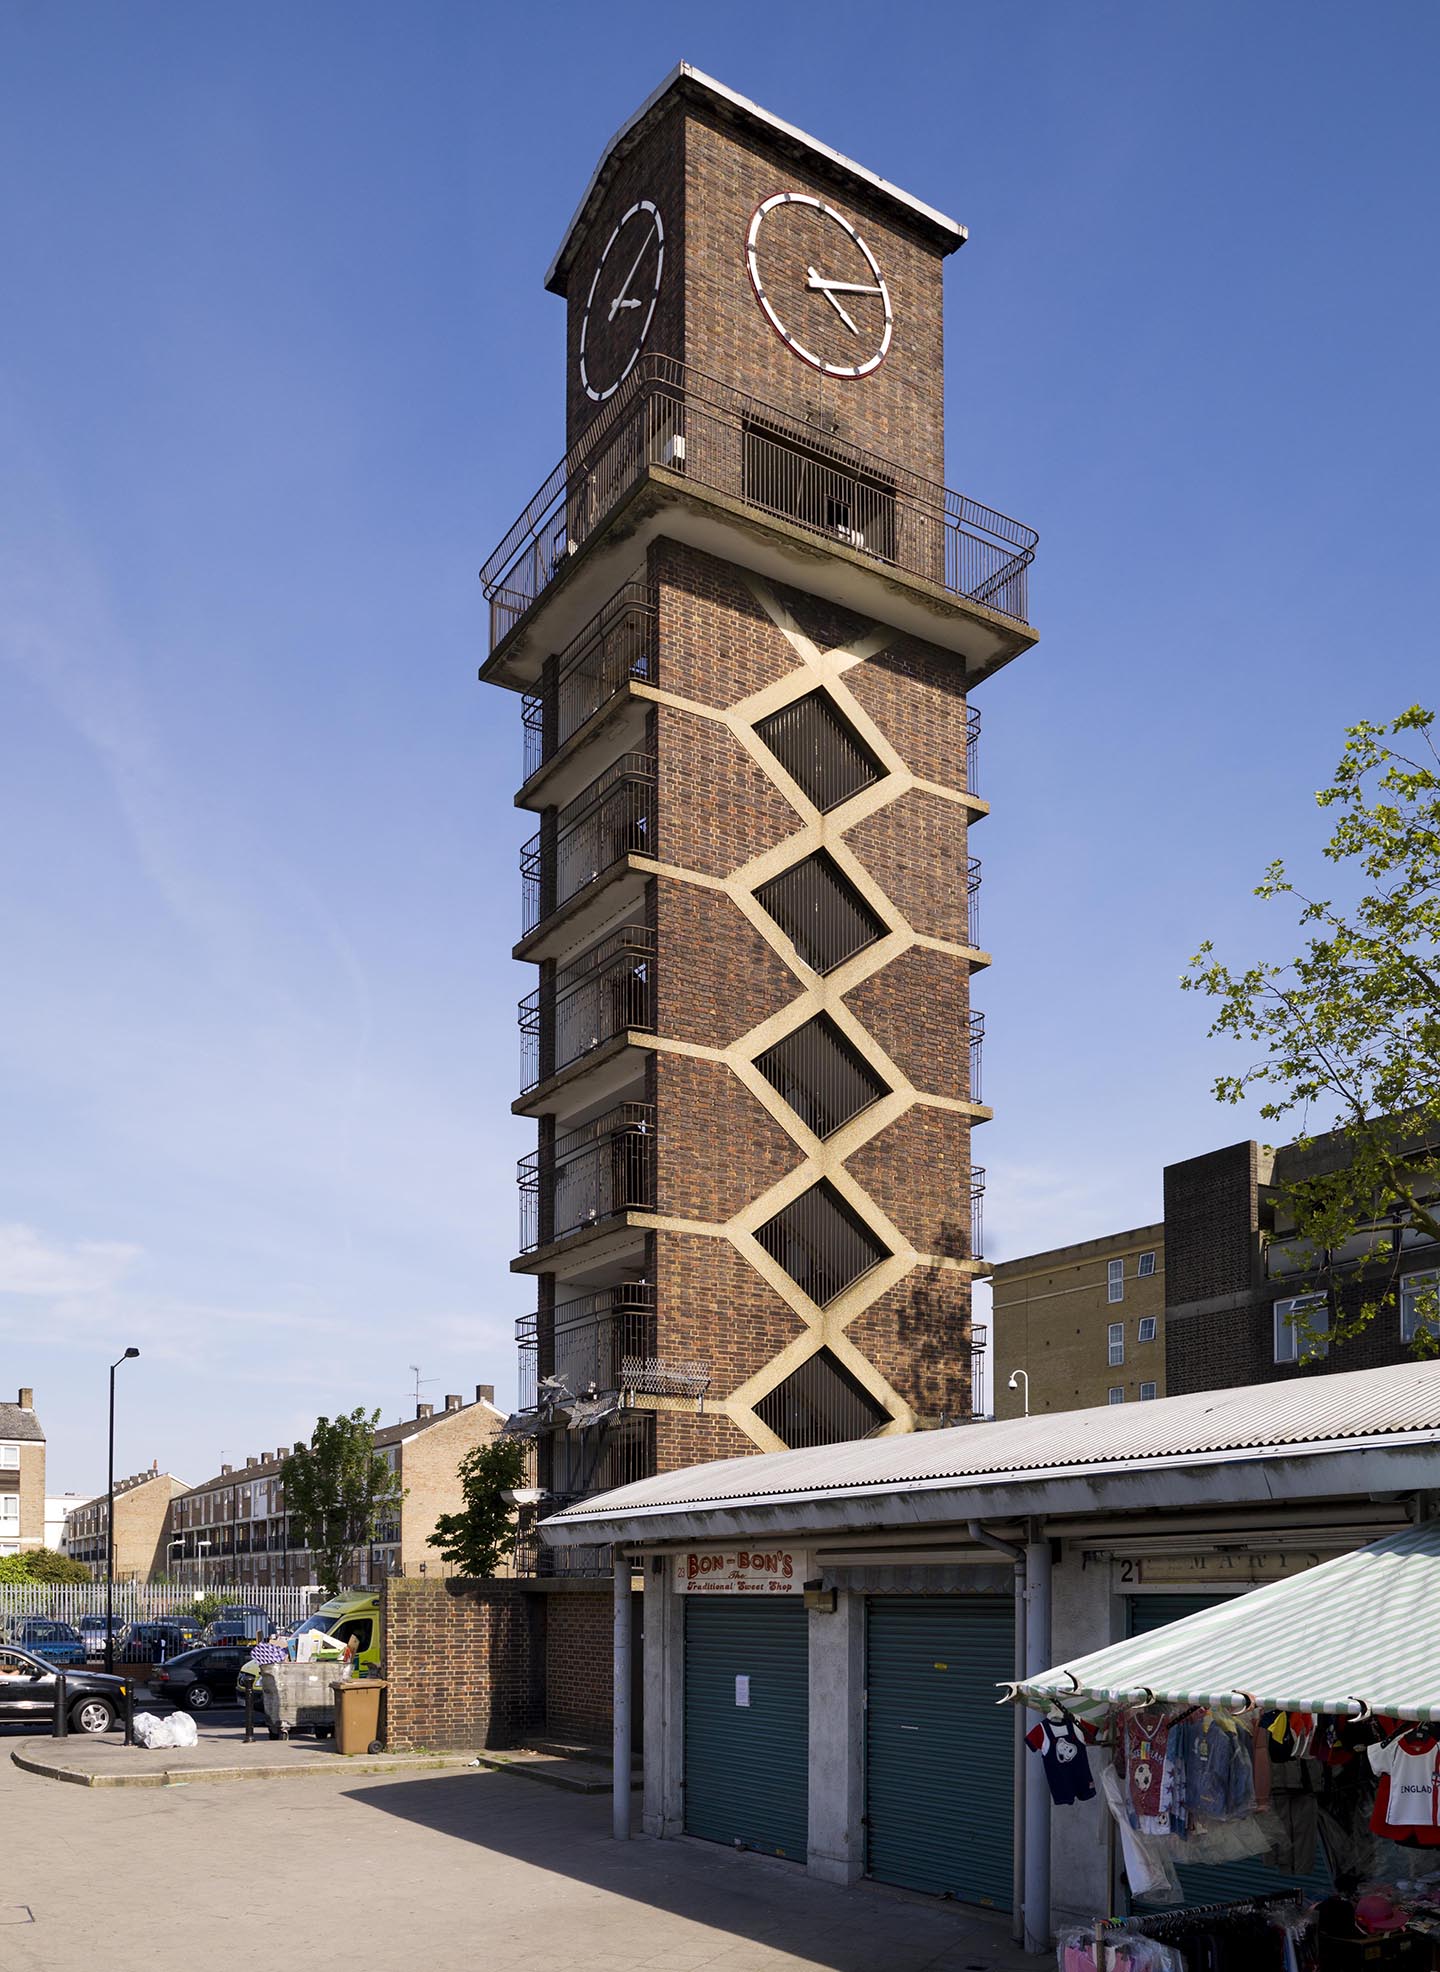 Clock tower at the south-eastern corner of Chrisp Street Market, Lansbury